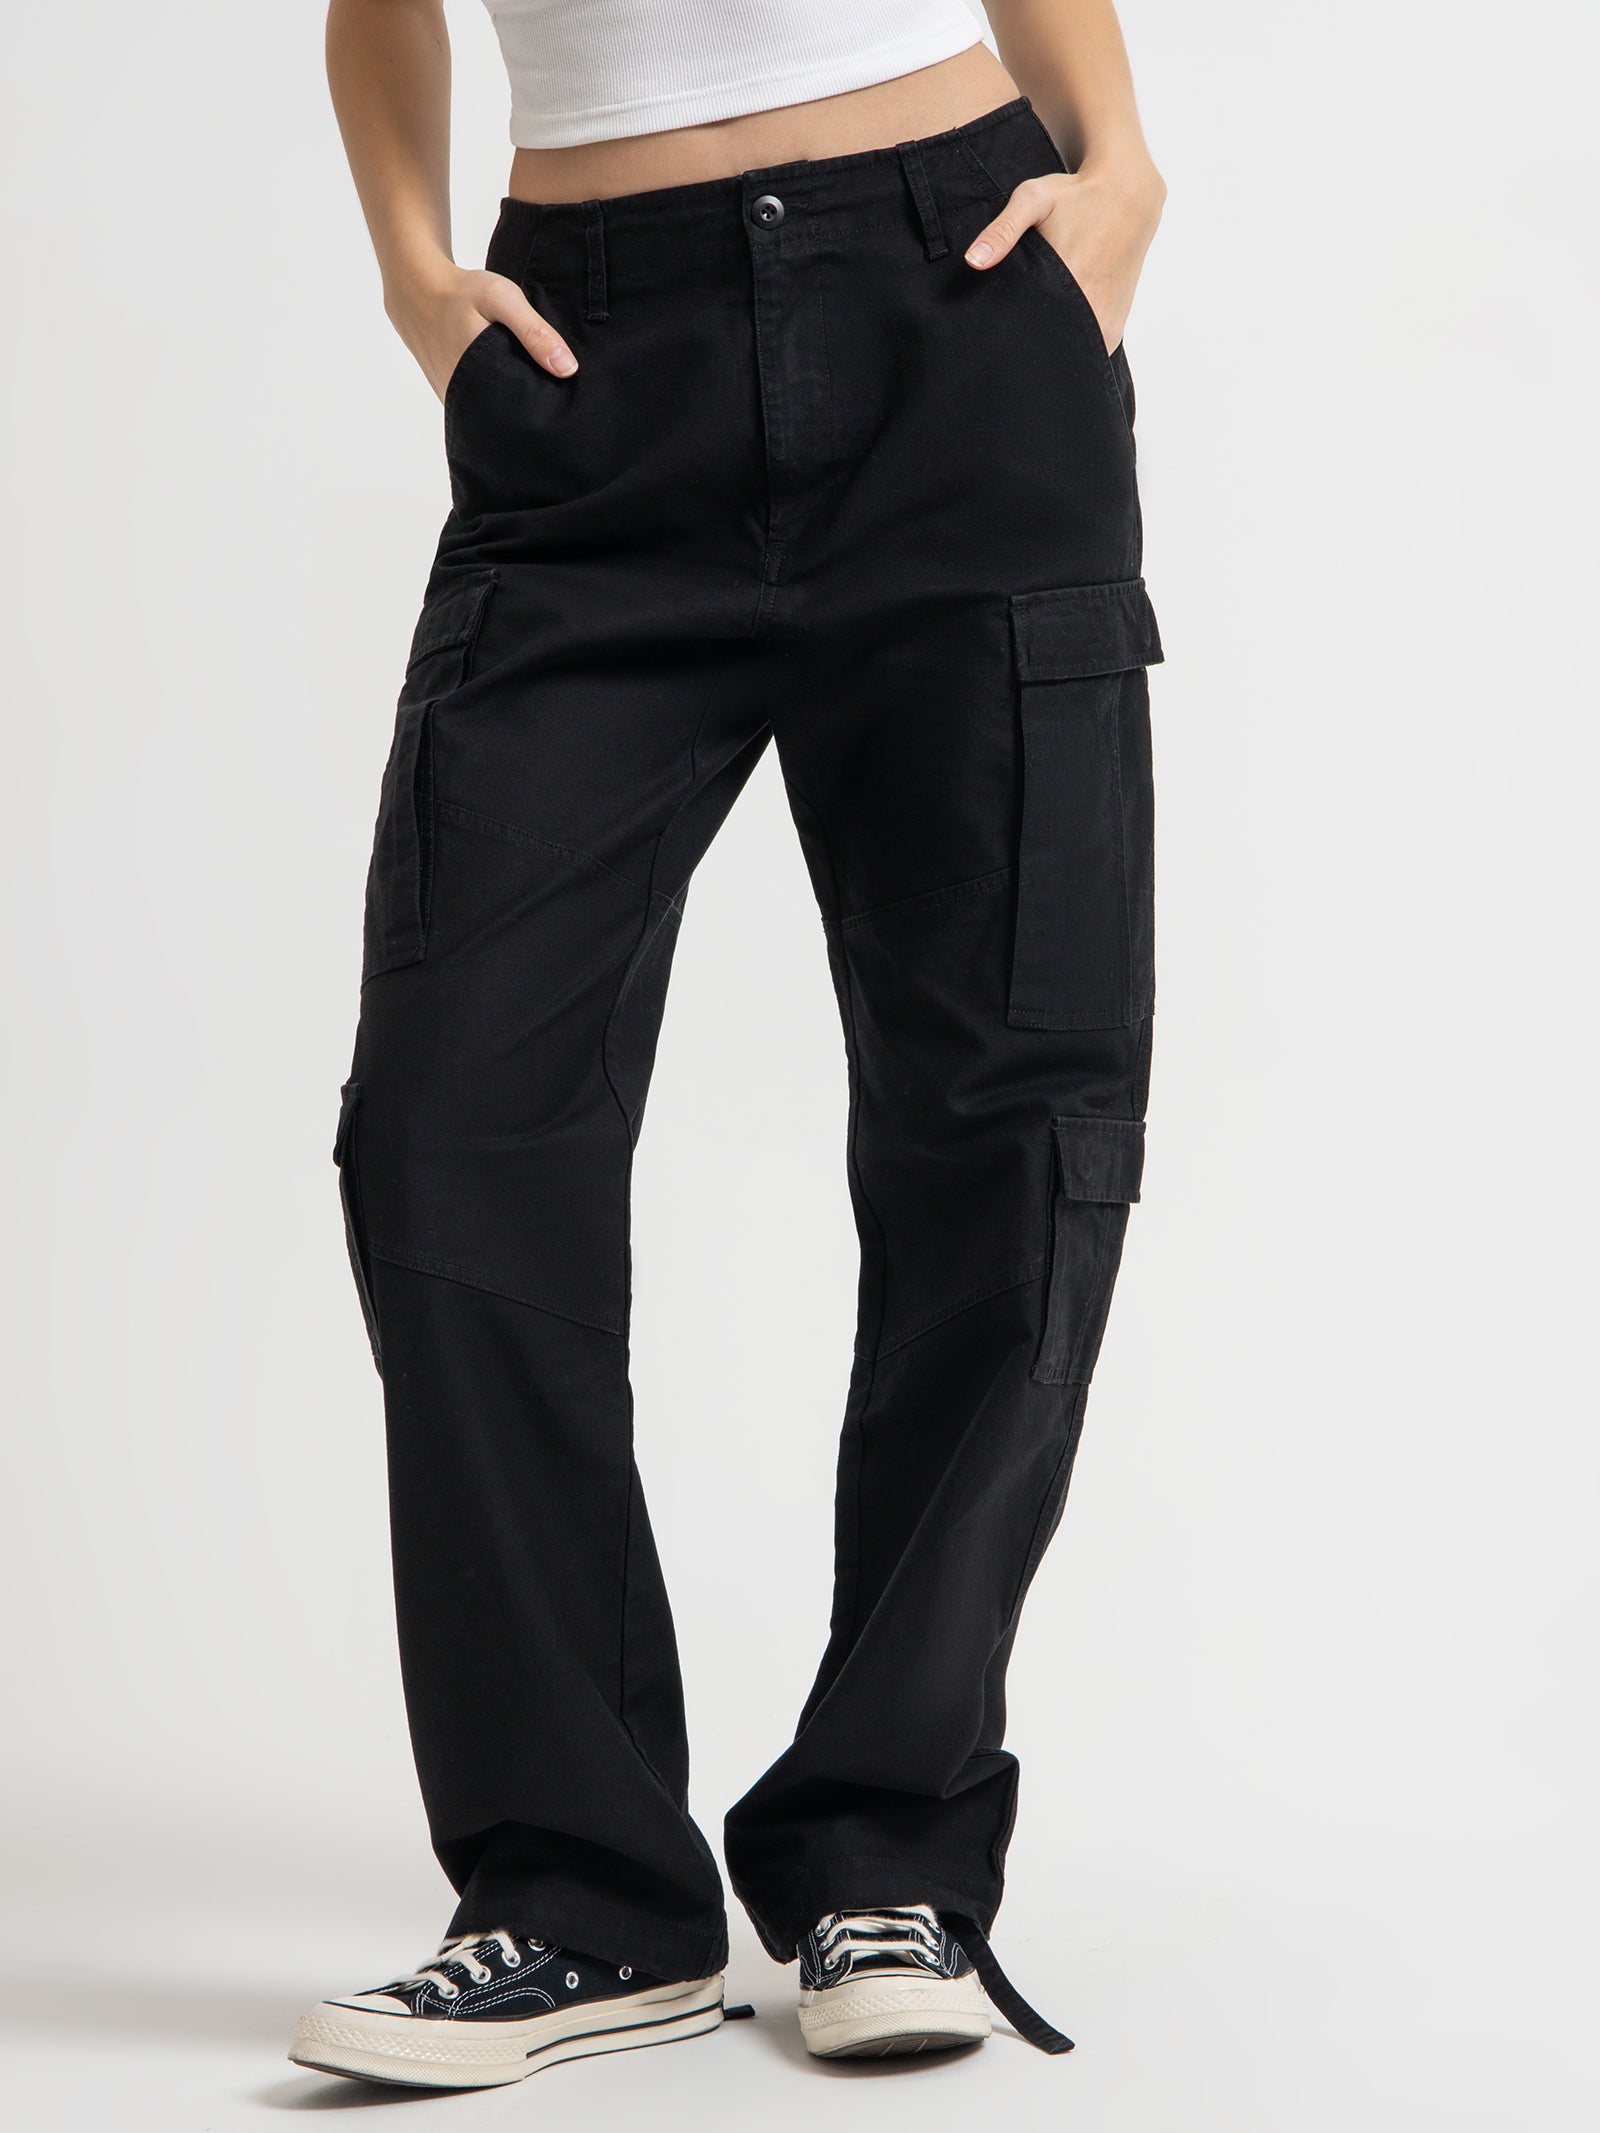 Buy Women Black Hip-Hop Streetwear Cargo Pants Online At Best Price -  Sassafras.in